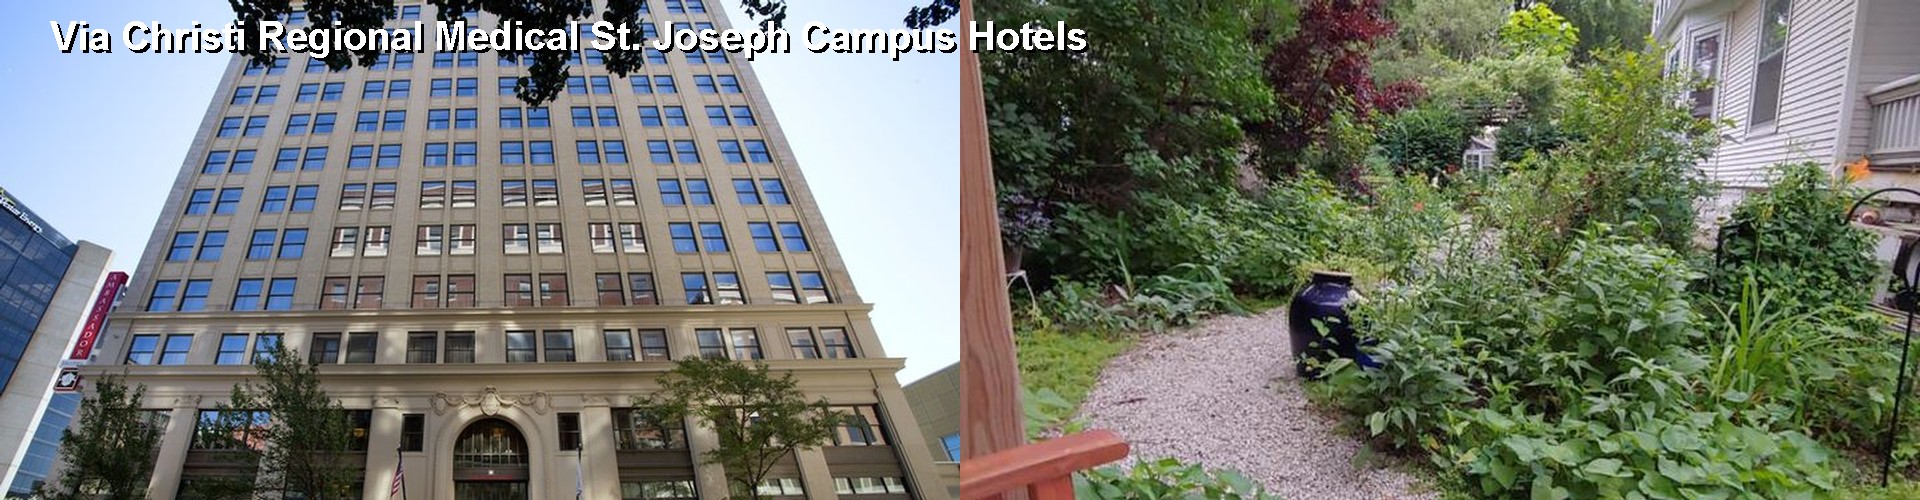 4 Best Hotels near Via Christi Regional Medical St. Joseph Campus